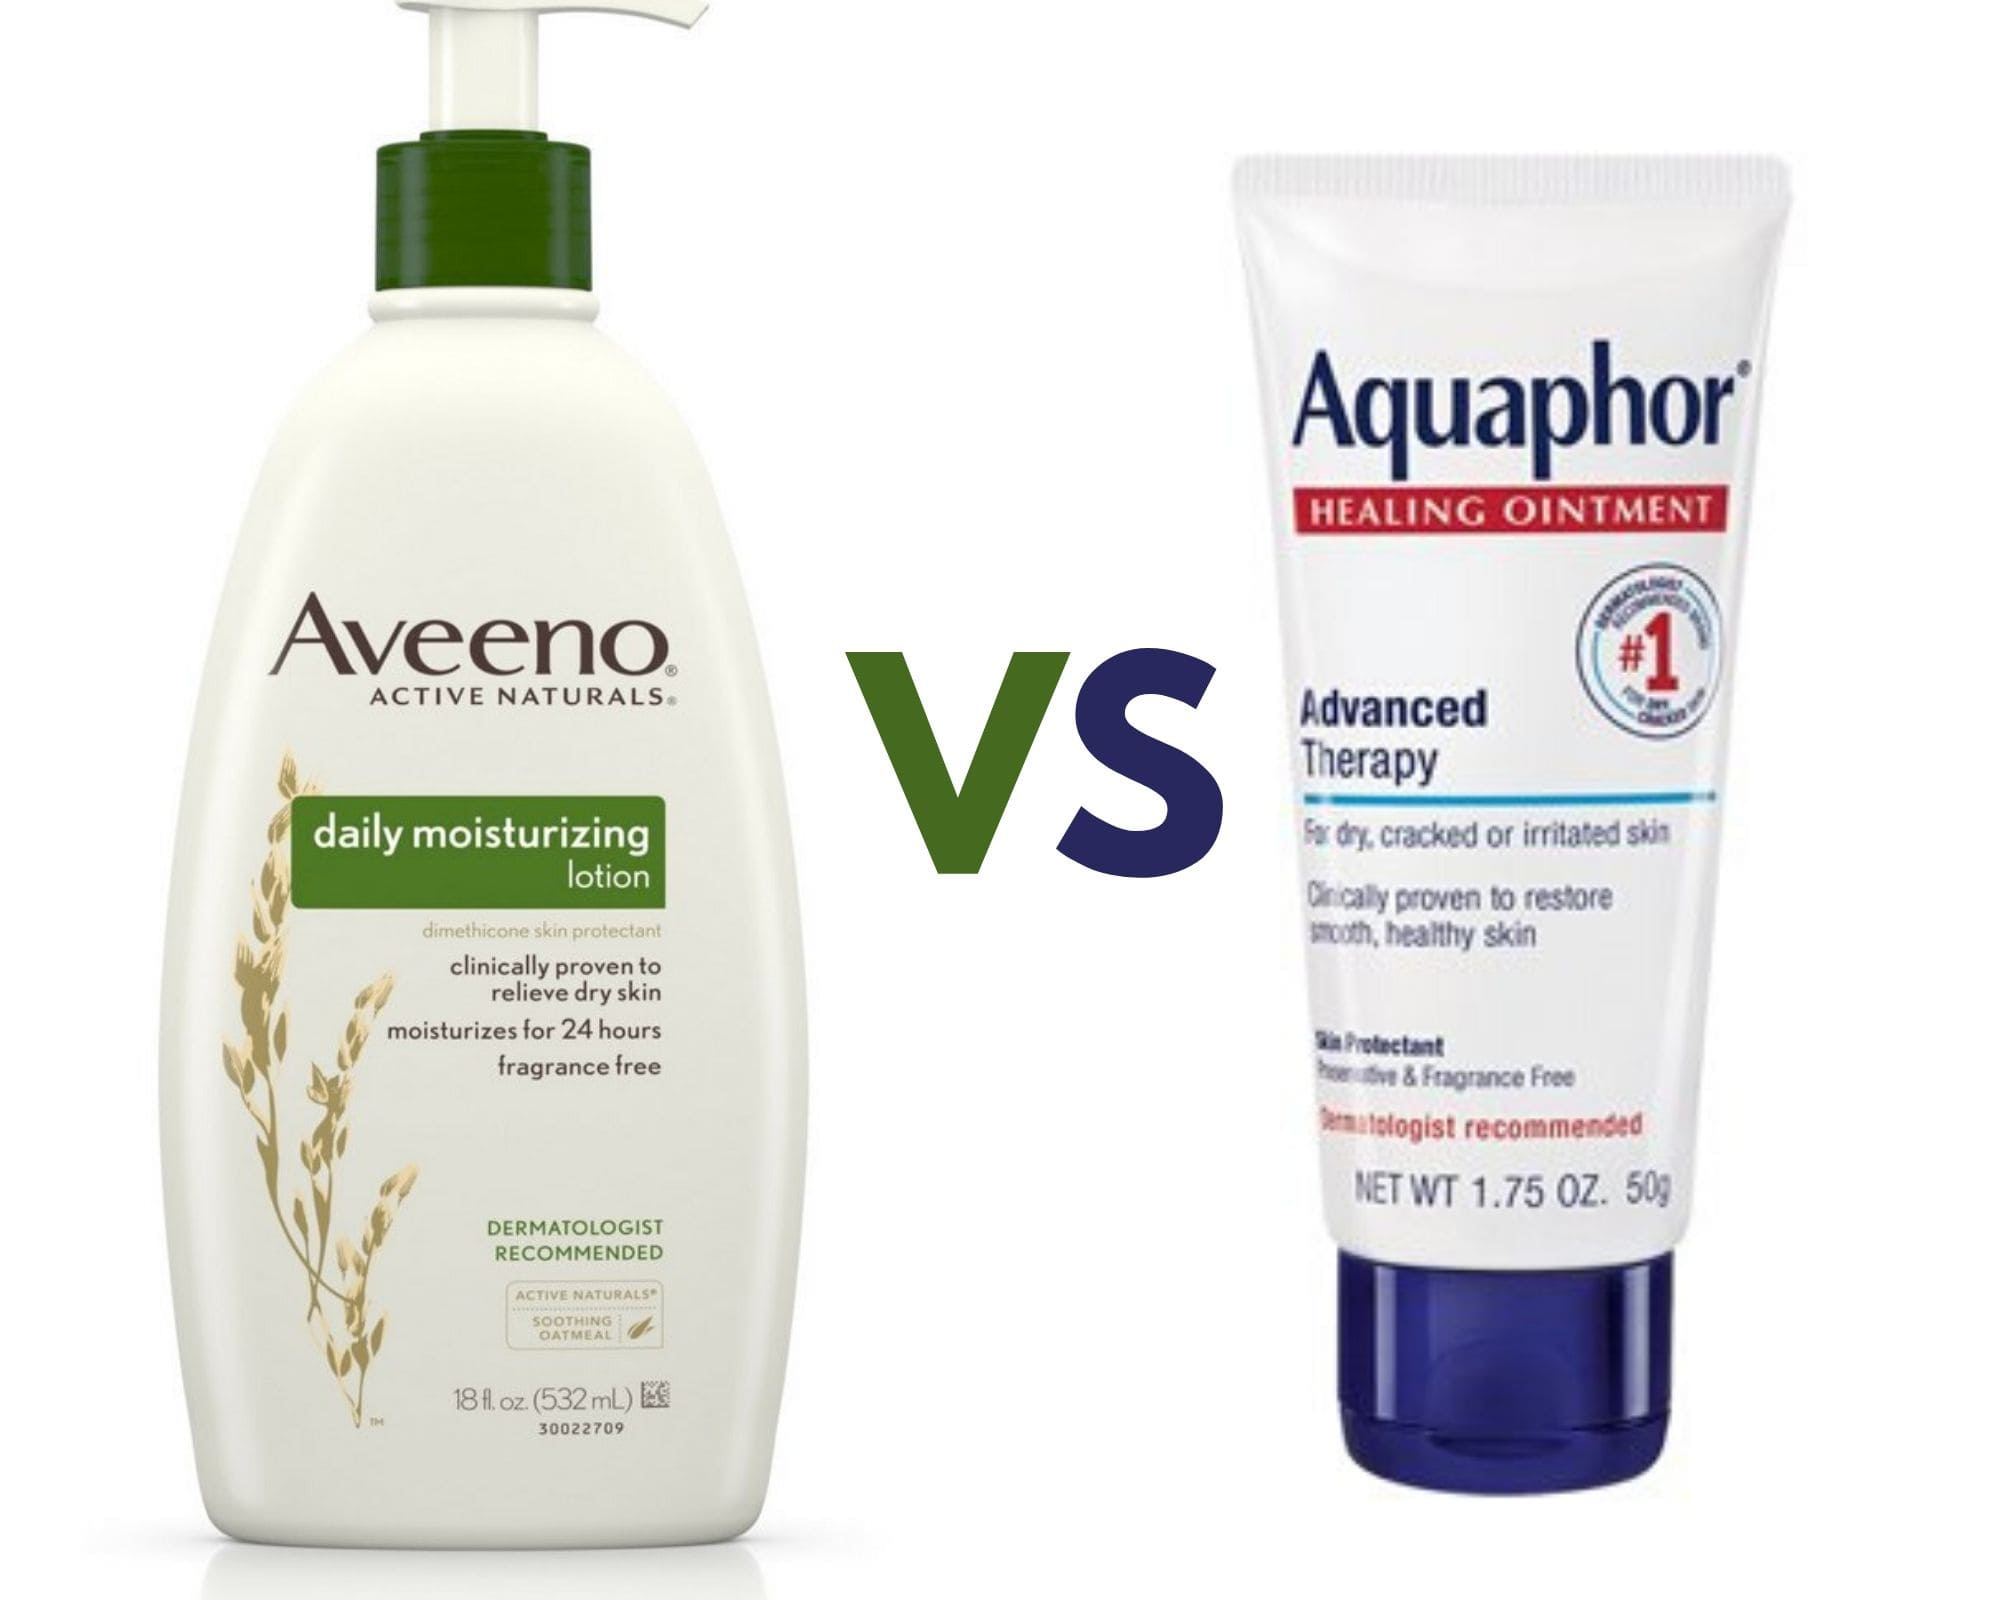 Aquaphor vs Aveeno